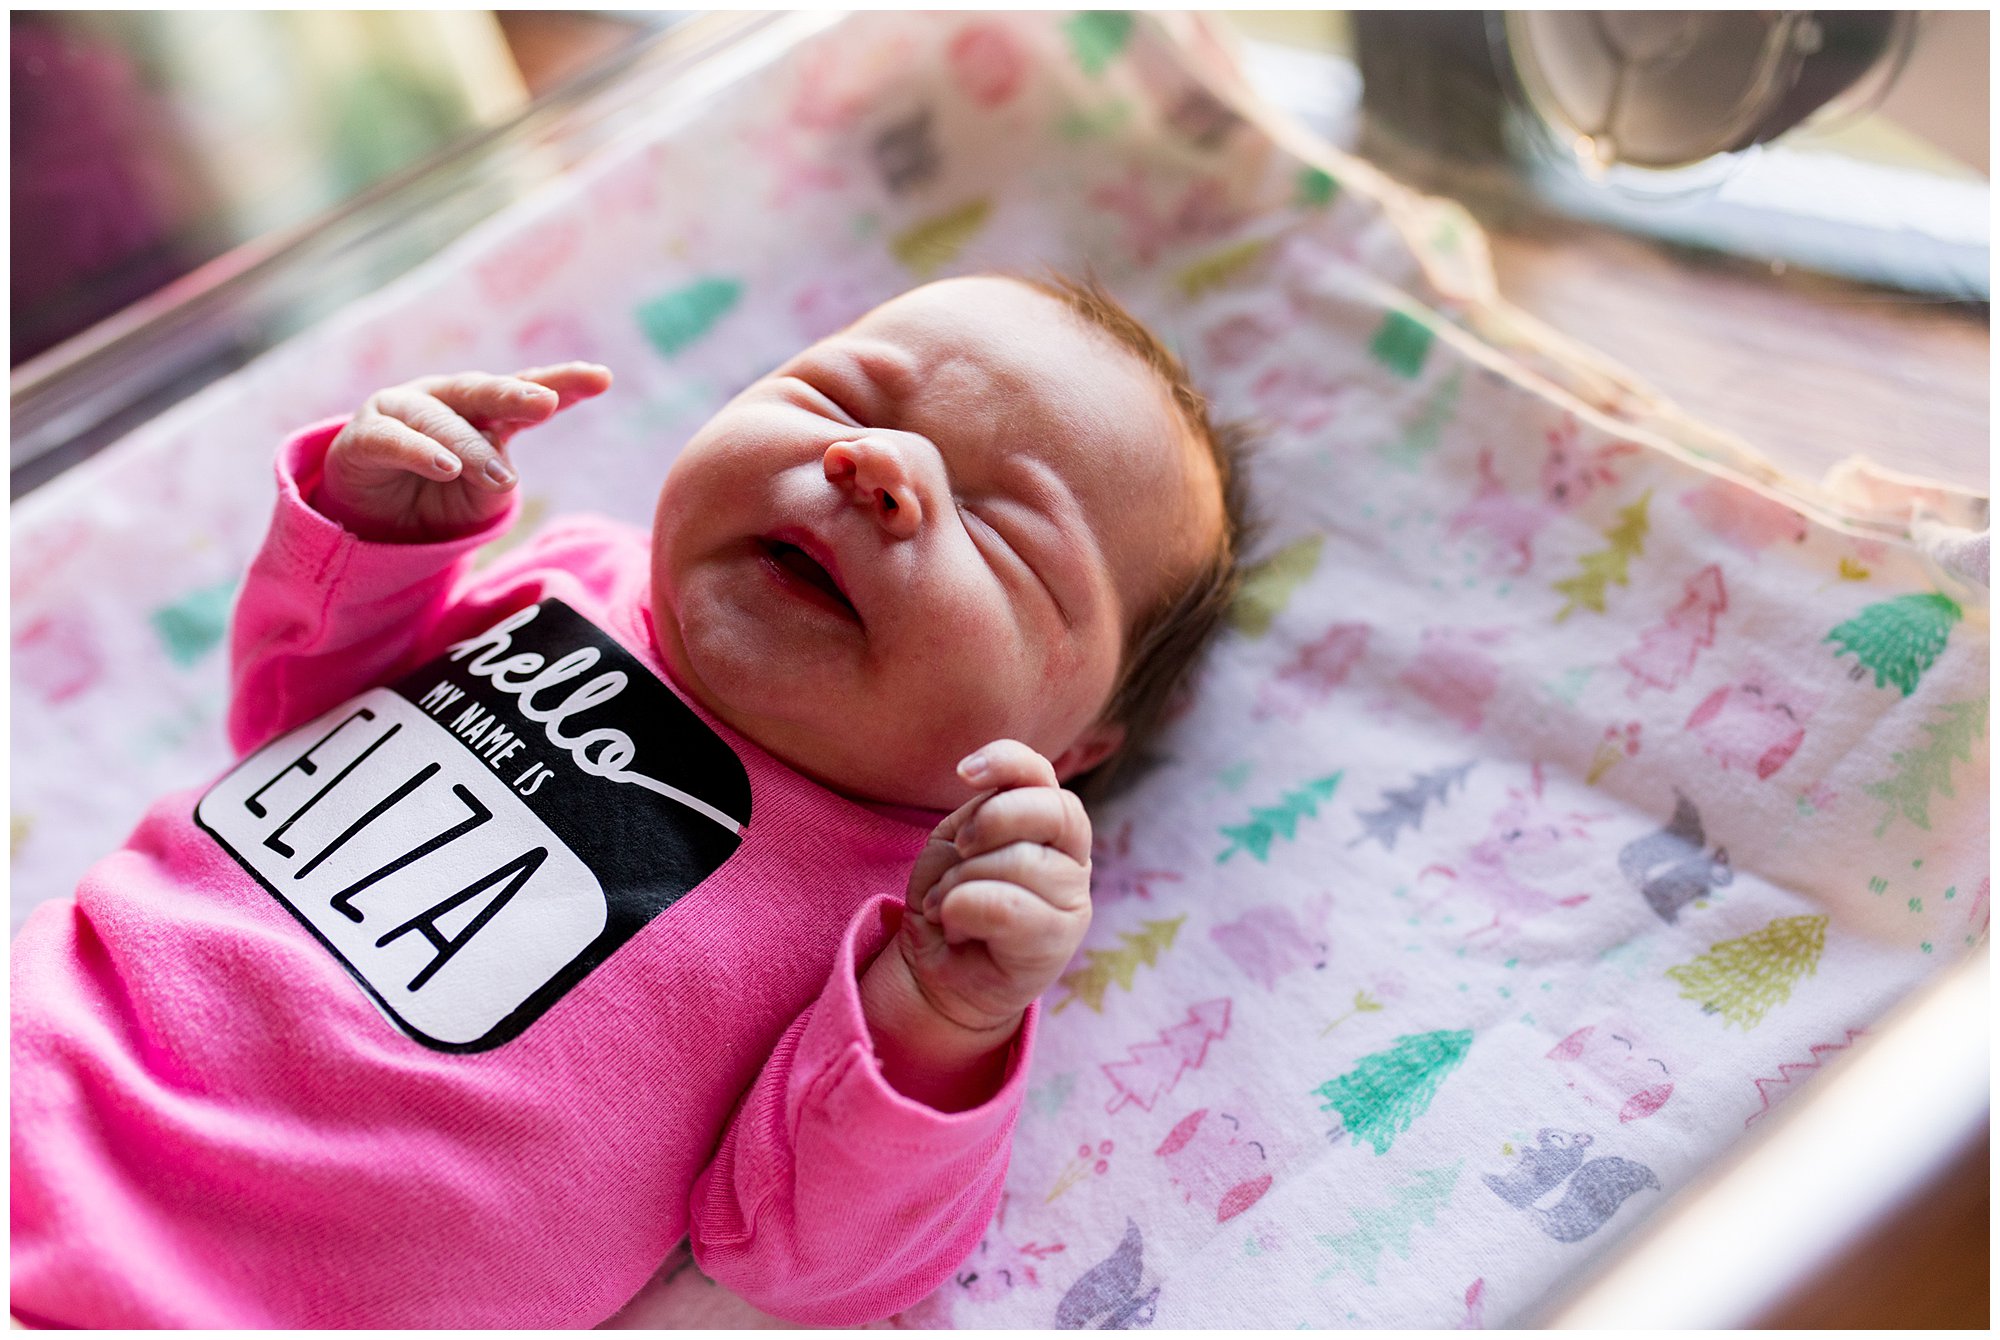 newborn baby during Columbus hospital Fresh 48 session